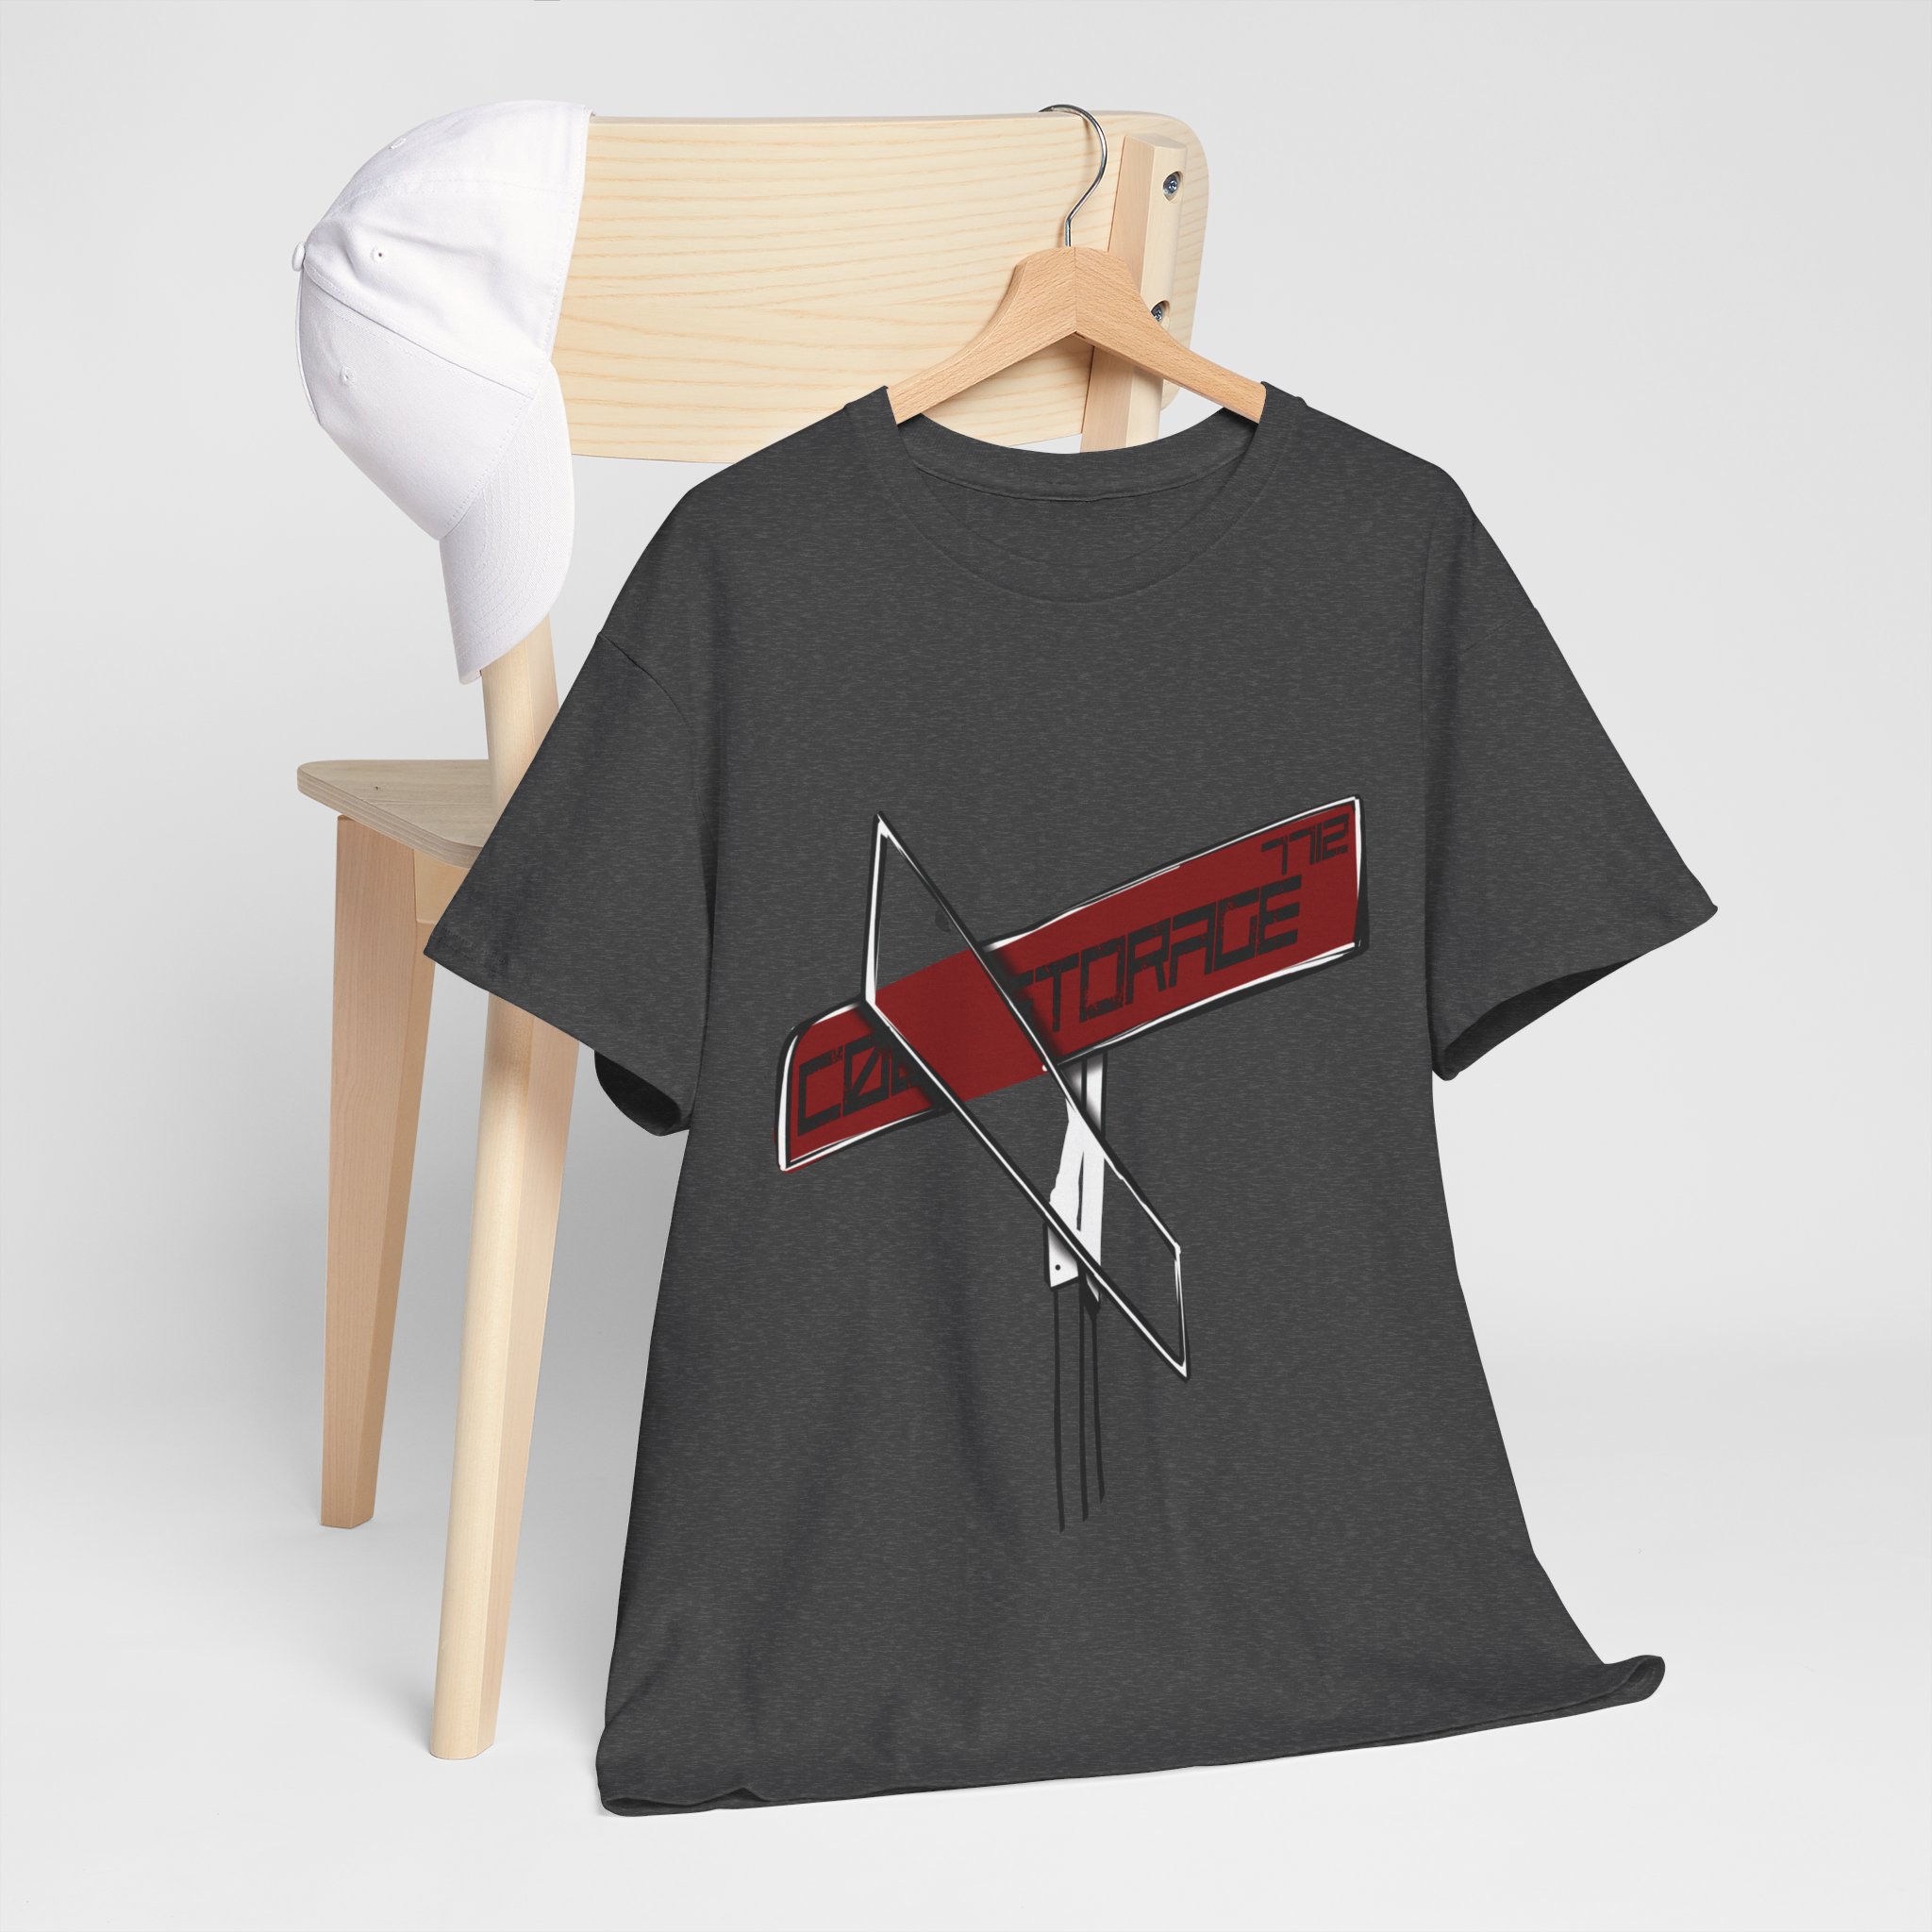 T-shirt design for Rodan of c0ldstorage.